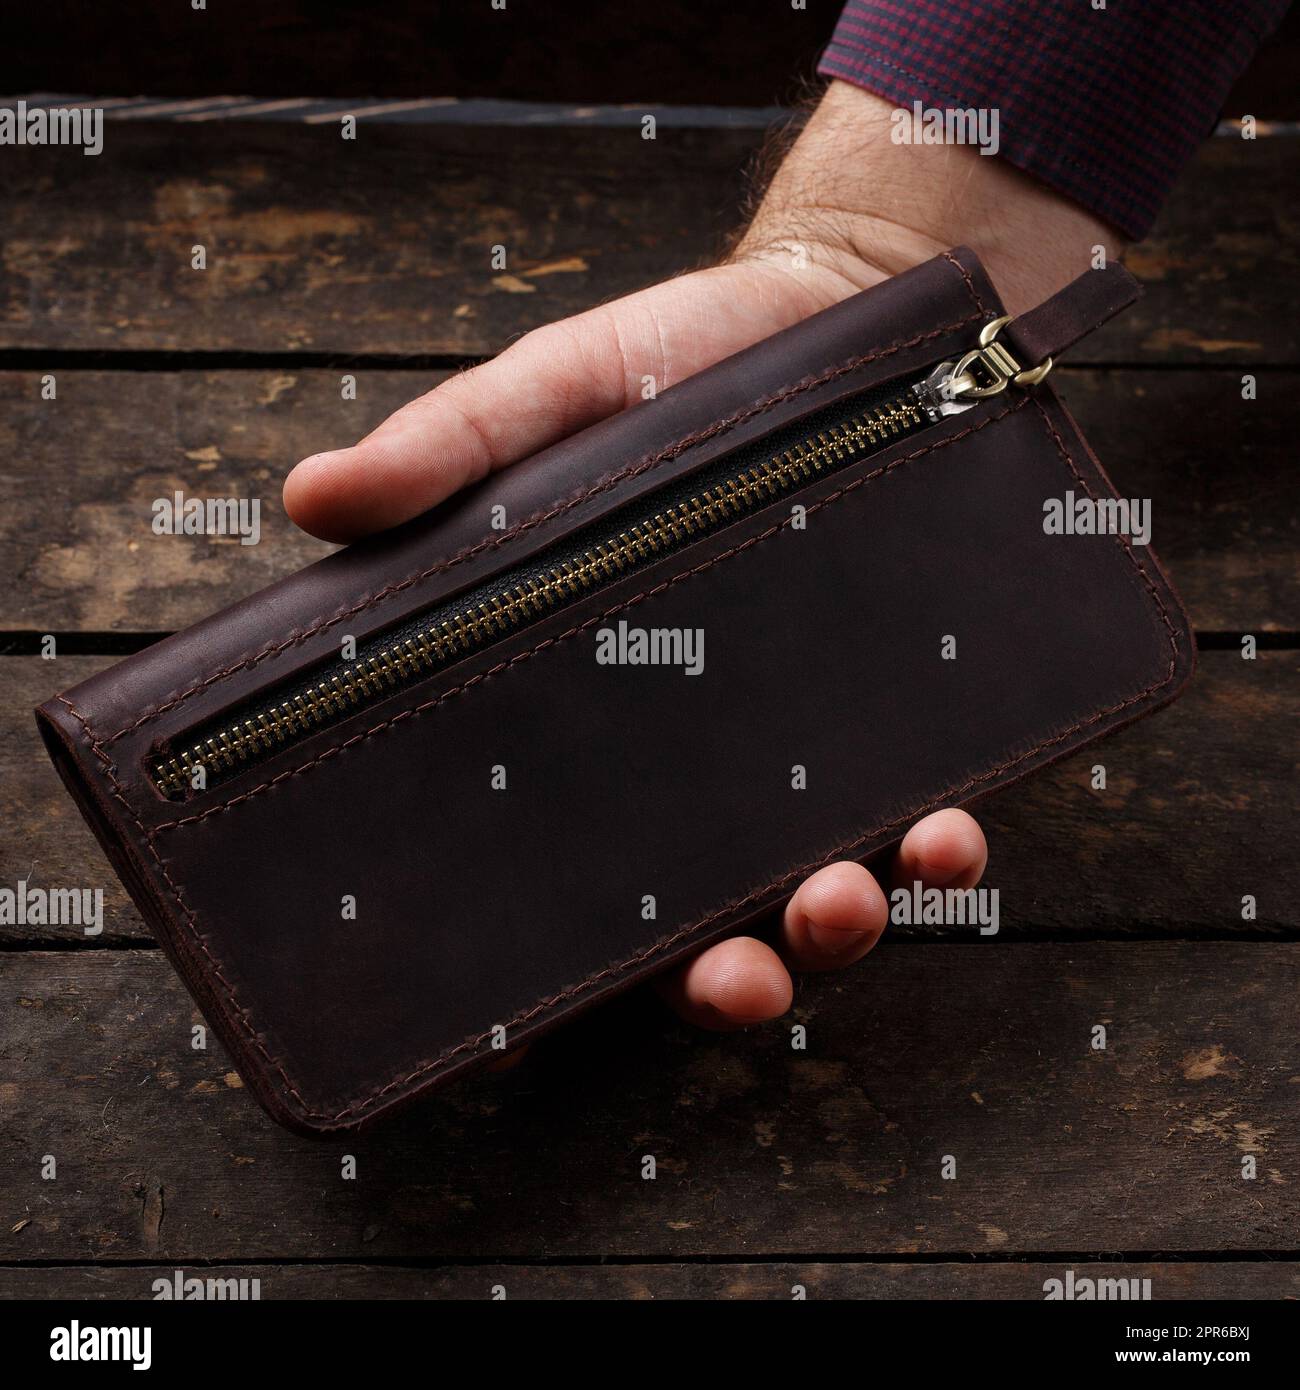 Buy Spiffy Premium Branded Genuine Leather Wallet for Men with Card Holder  | Wallet Men | RFID Men Wallet | Men Purse at Amazon.in